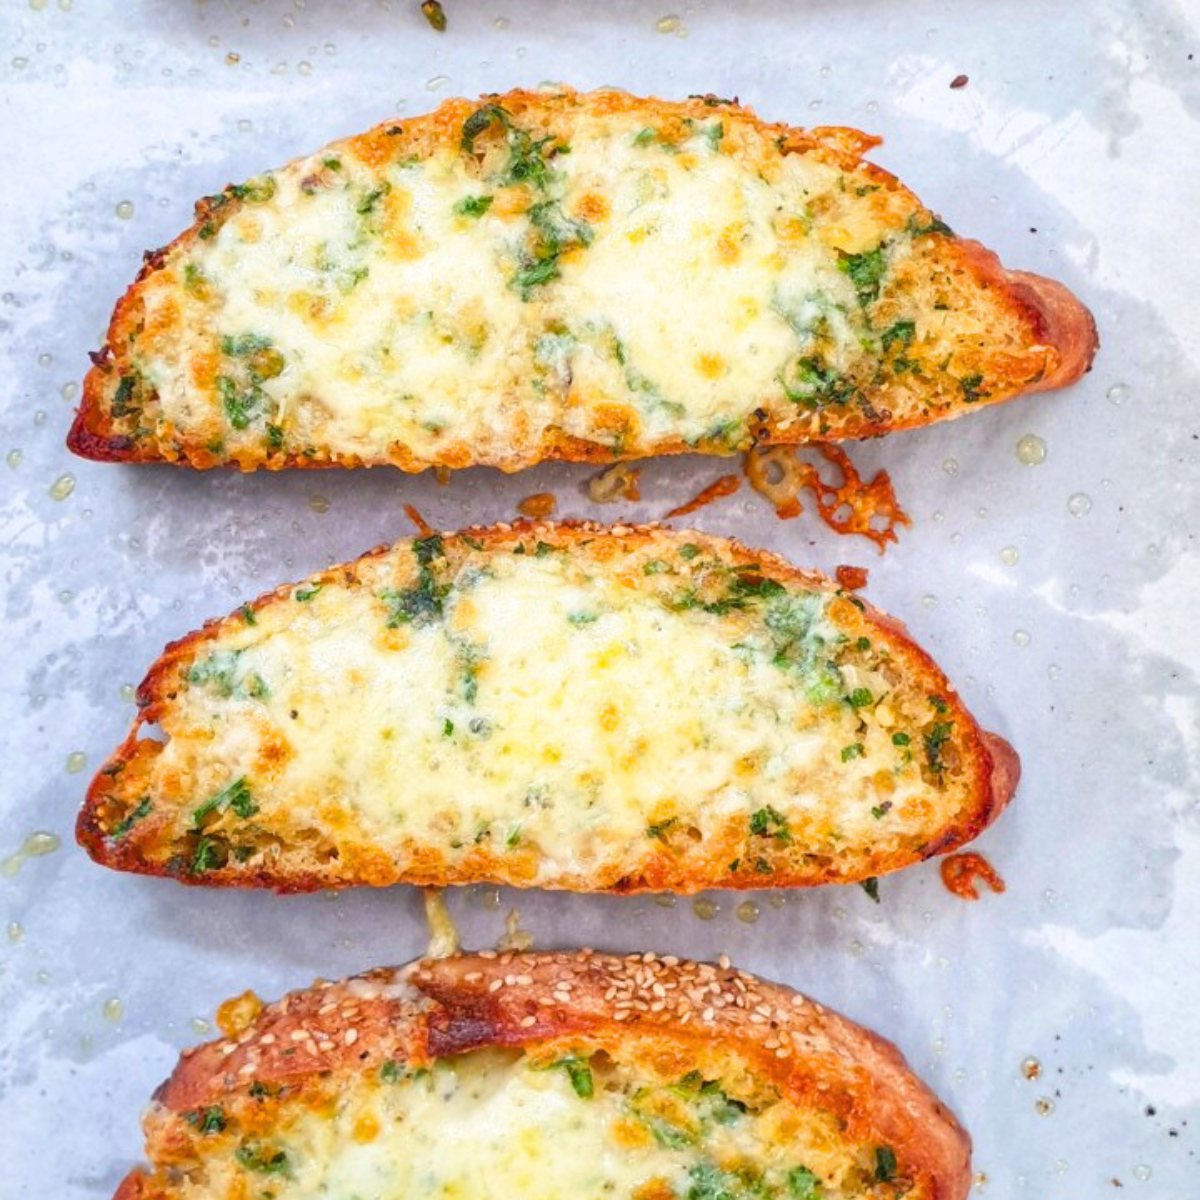 garlic cheese toast